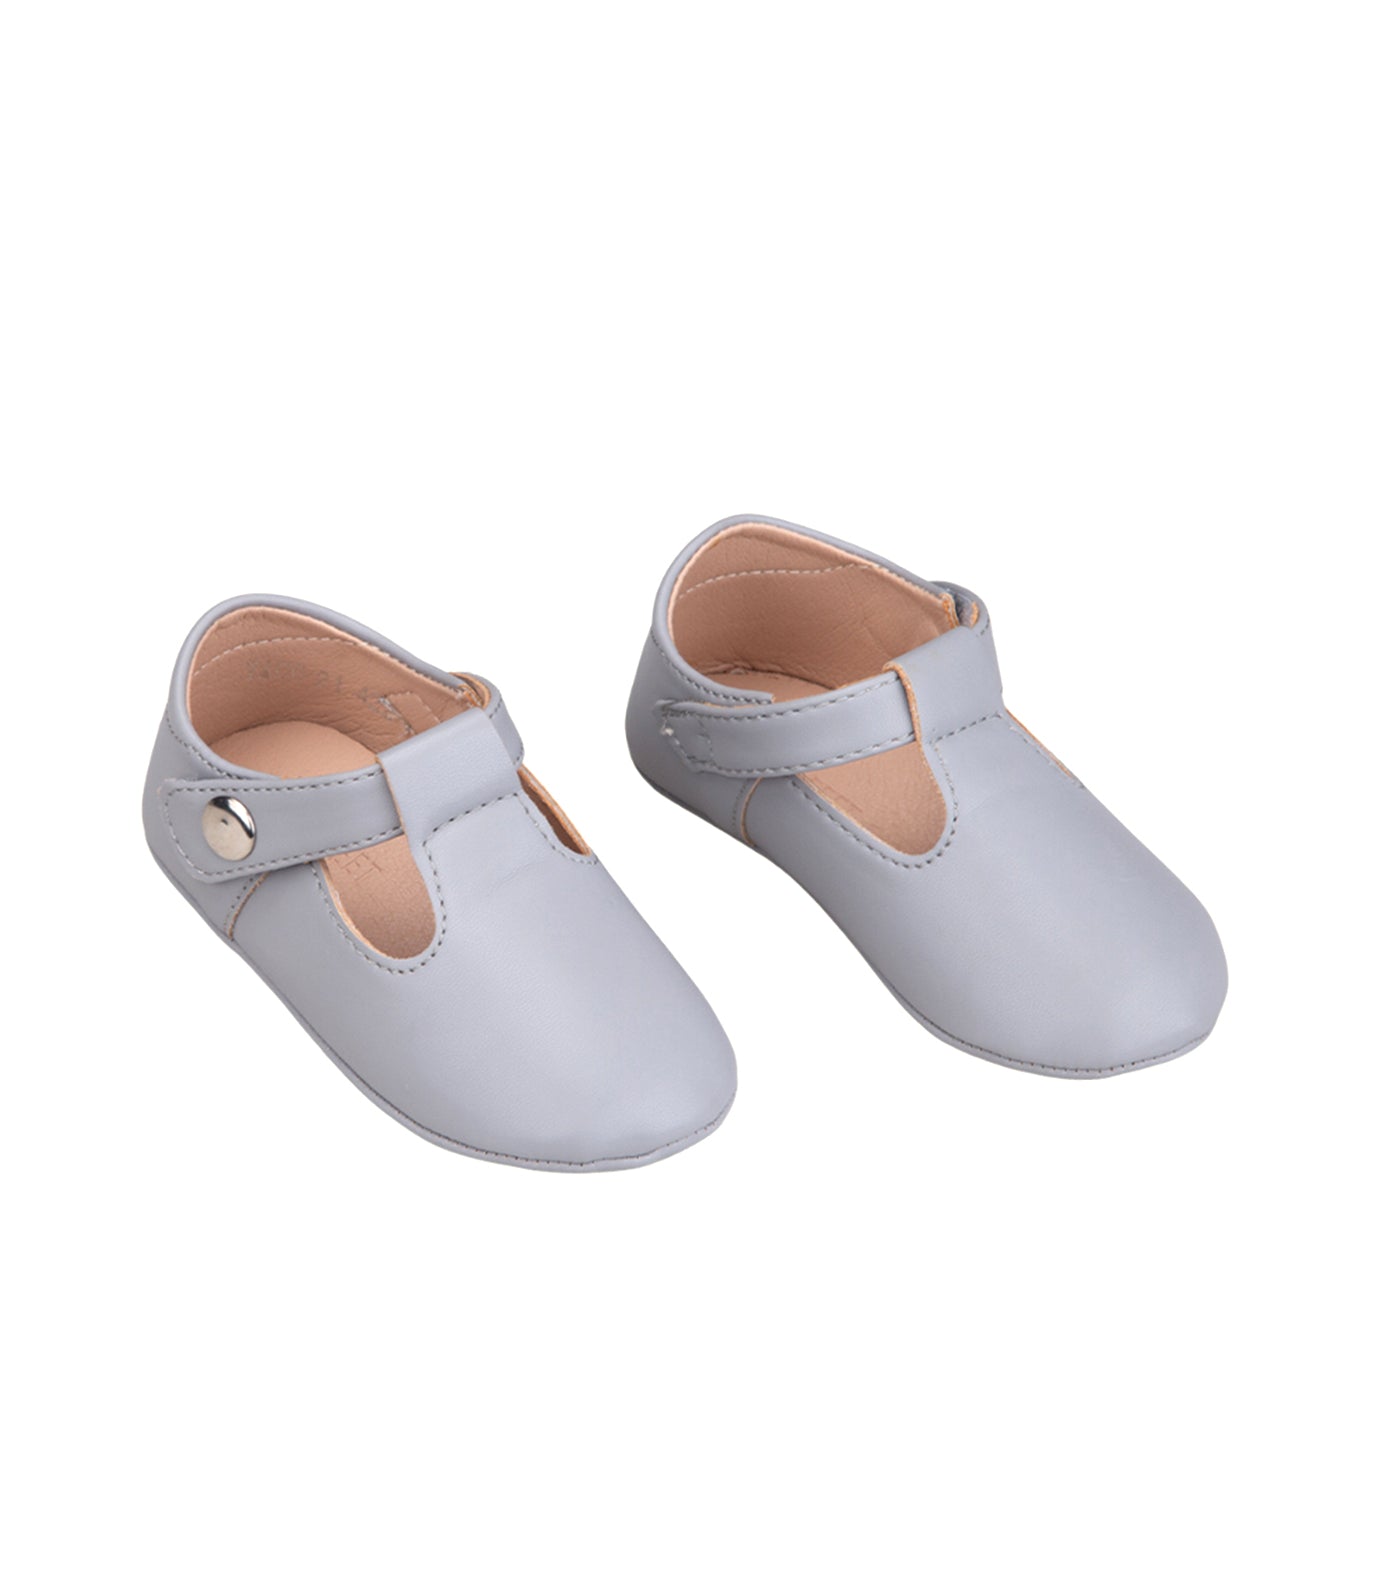 Taco Unisex Infant Shoes - Gray